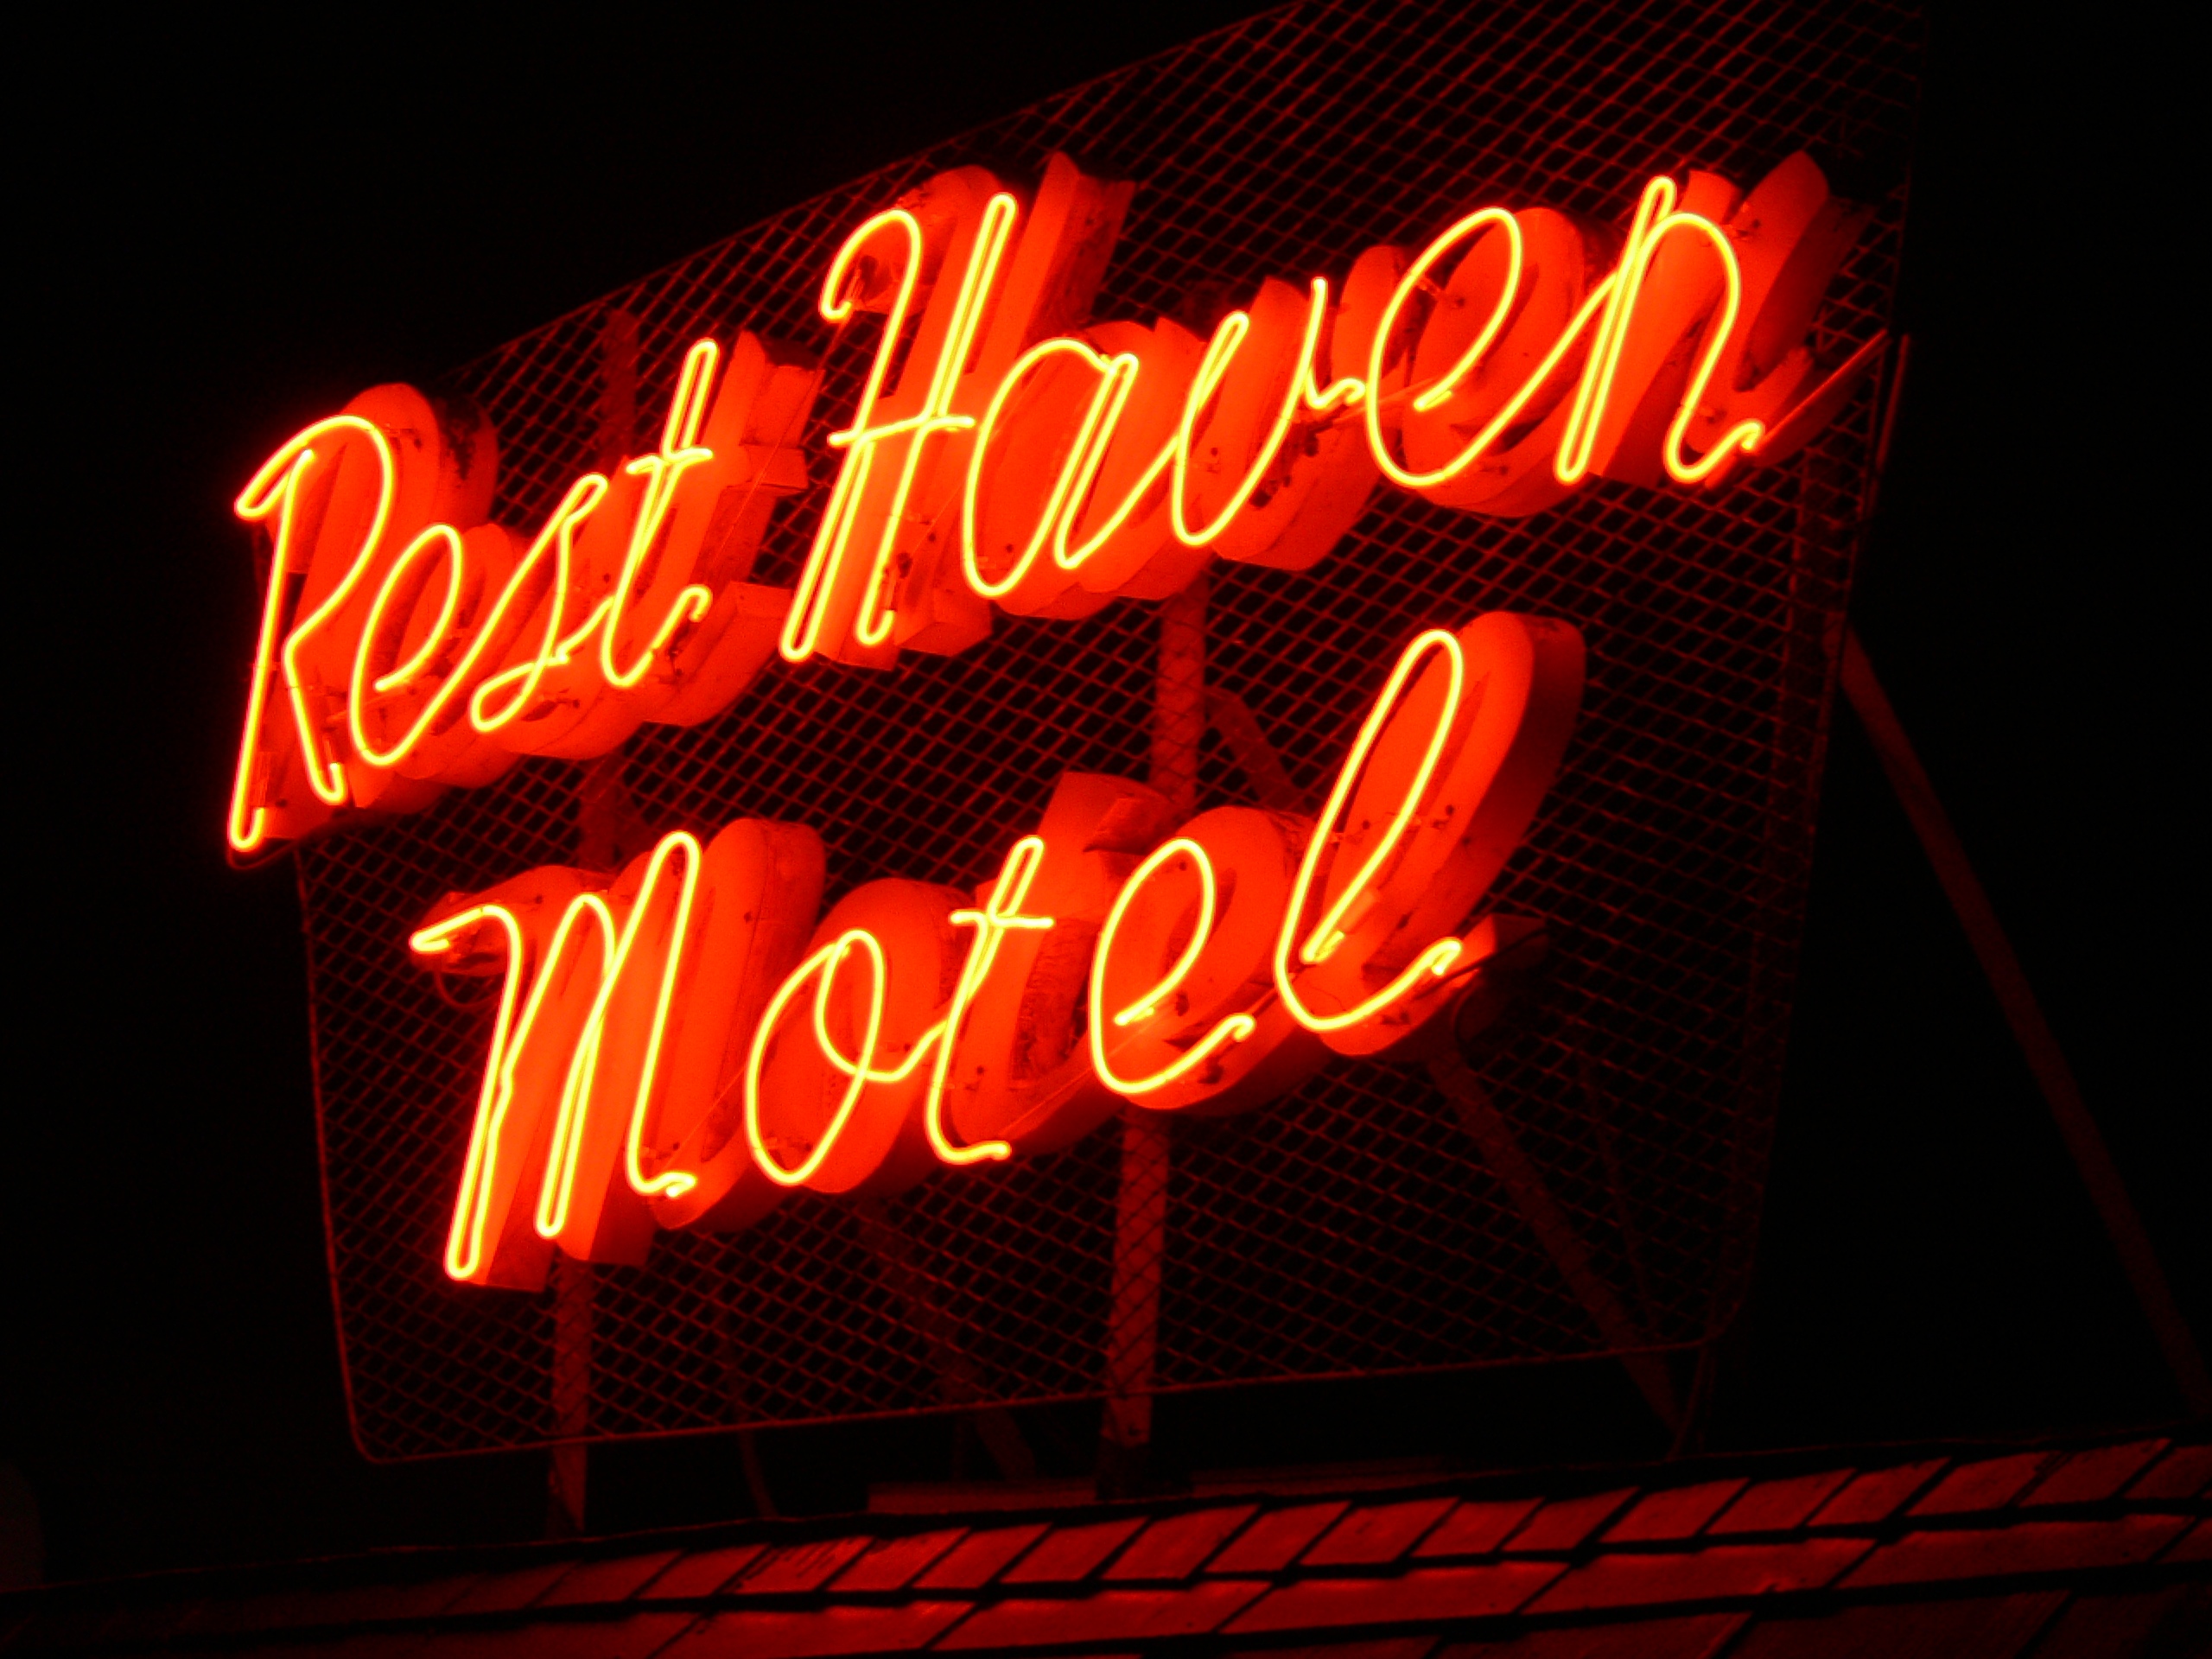 Rest Haven Motel - 815 Grant Street, Santa Monica, California U.S.A. - December 30, 2005